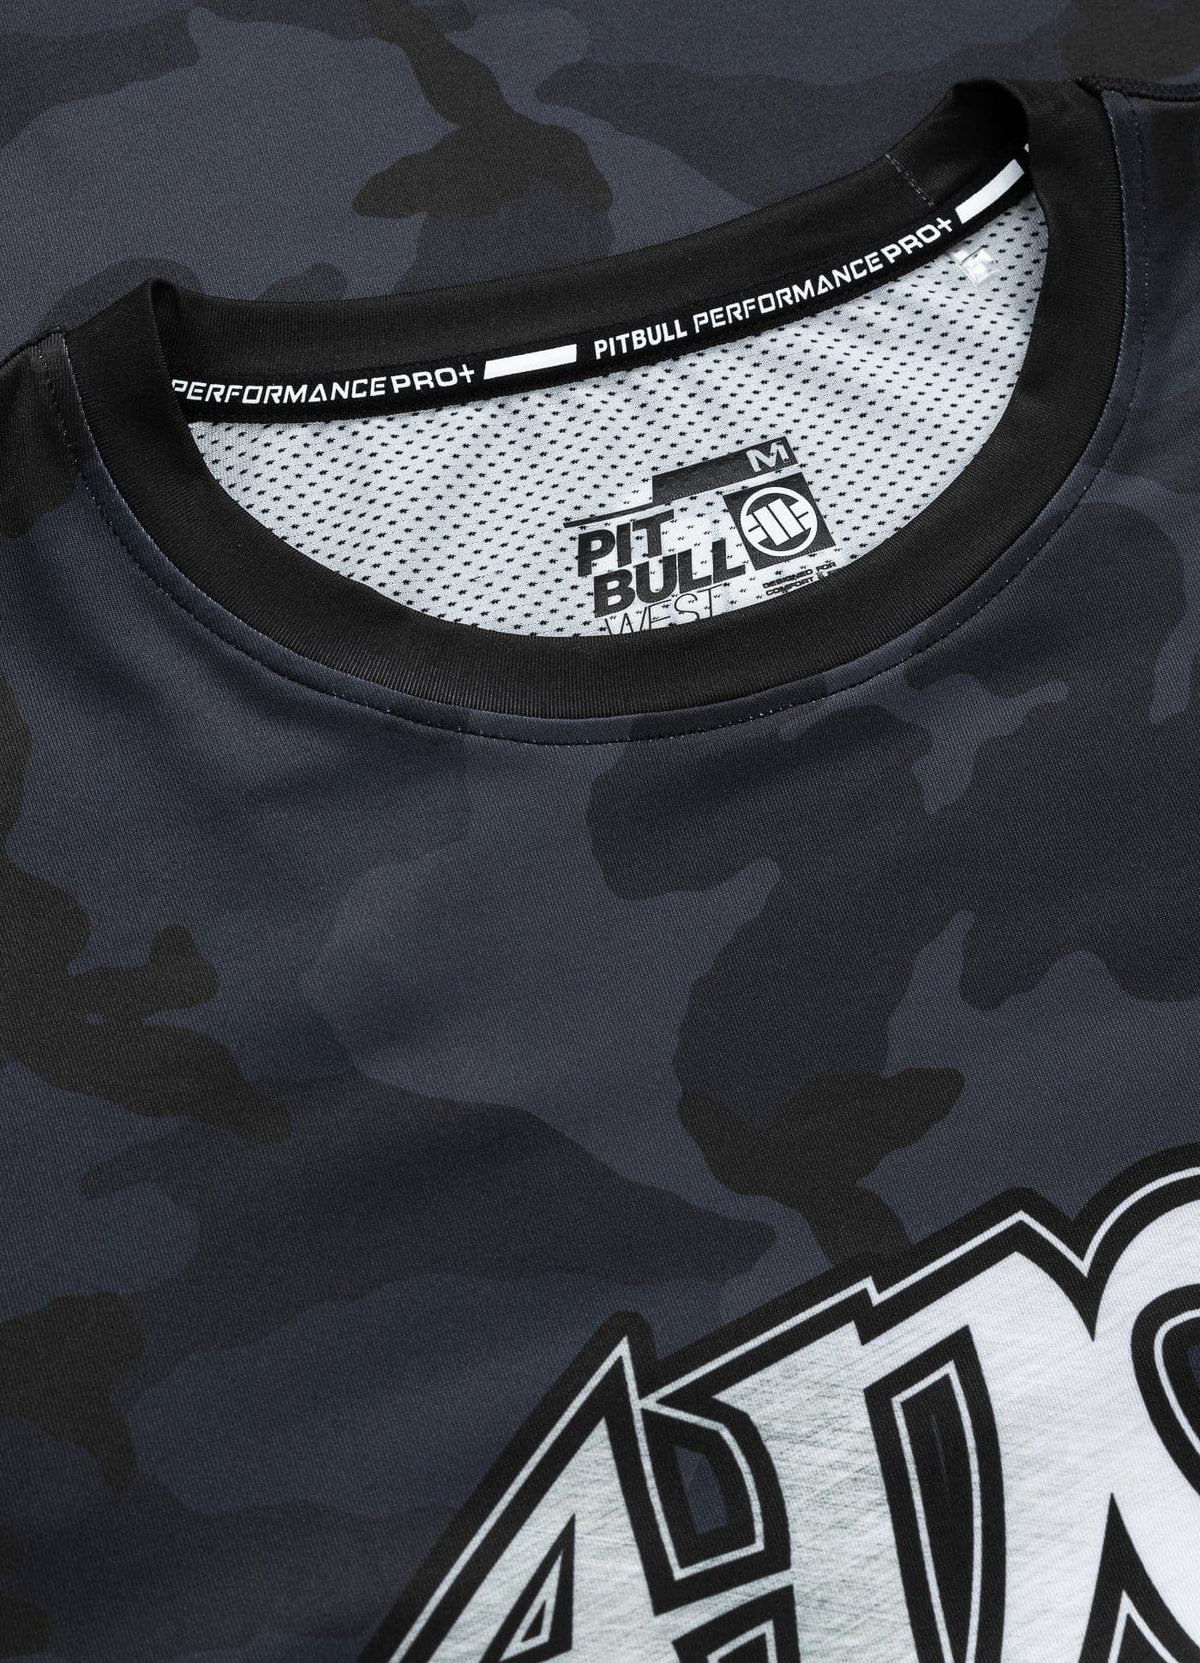 ADCC 2 All Black Camo Mesh Longsleeve T-shirt - Pitbull West Coast International Store 